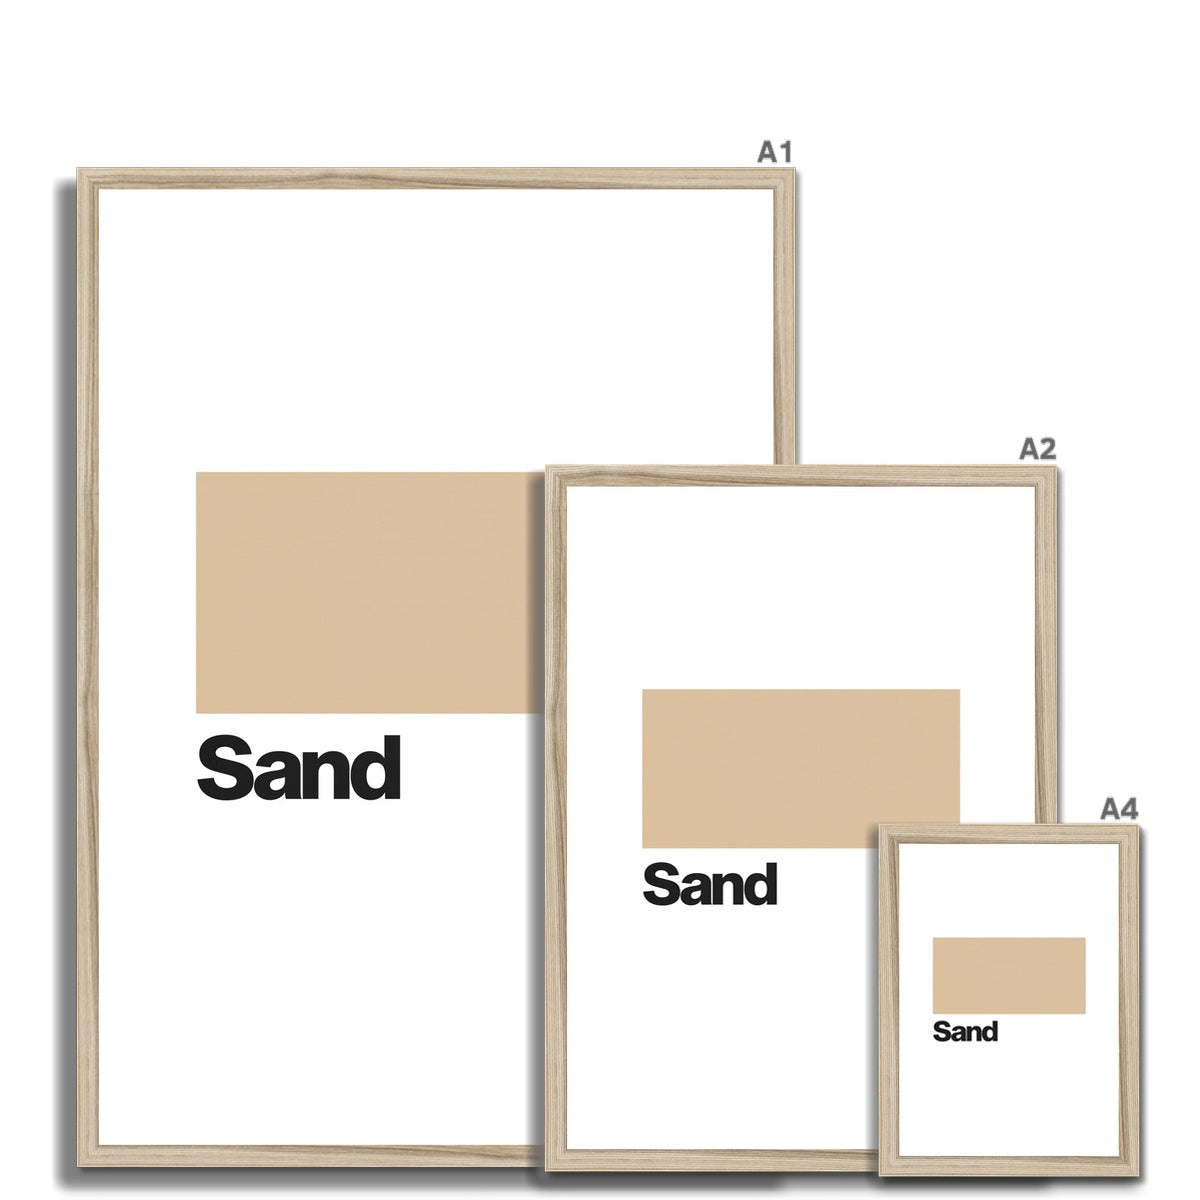 Sand Framed & Mounted Print